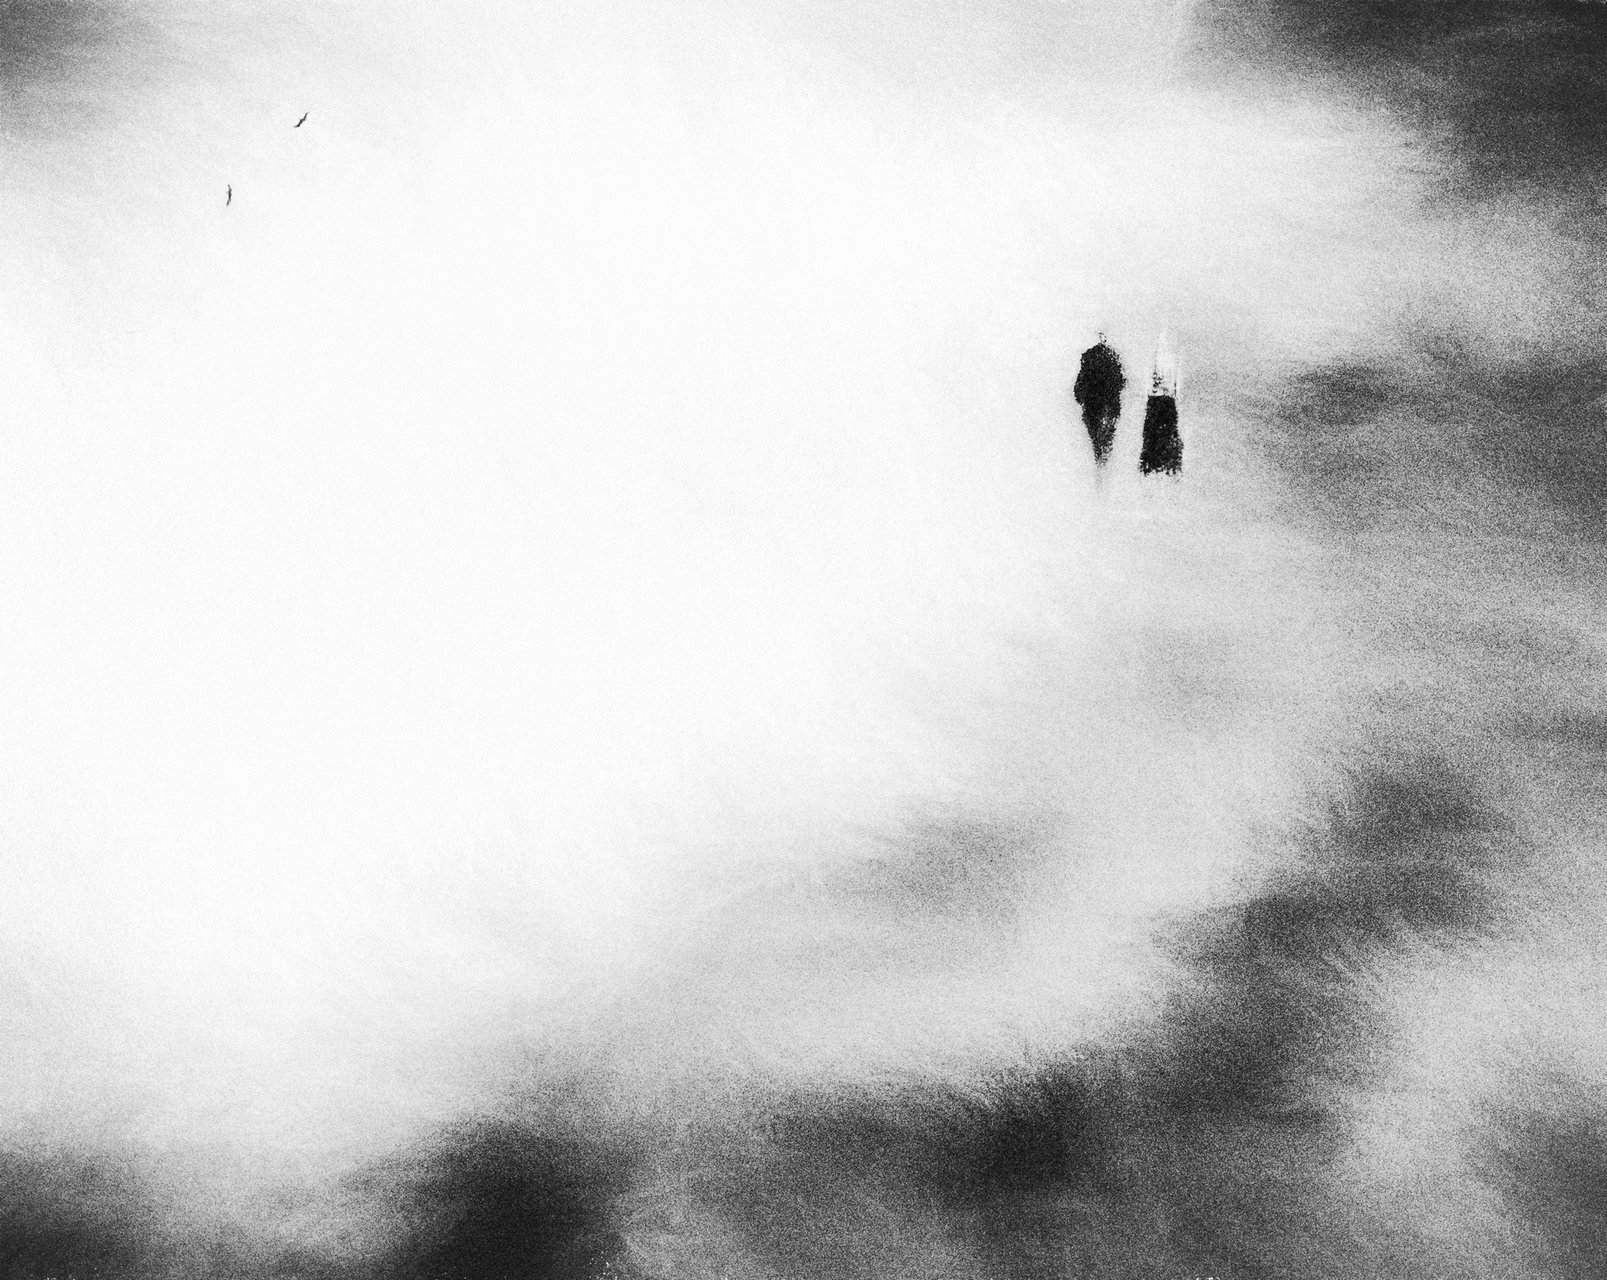 Photo in Abstract | Author Ilina Taneva - Инка | PHOTO FORUM